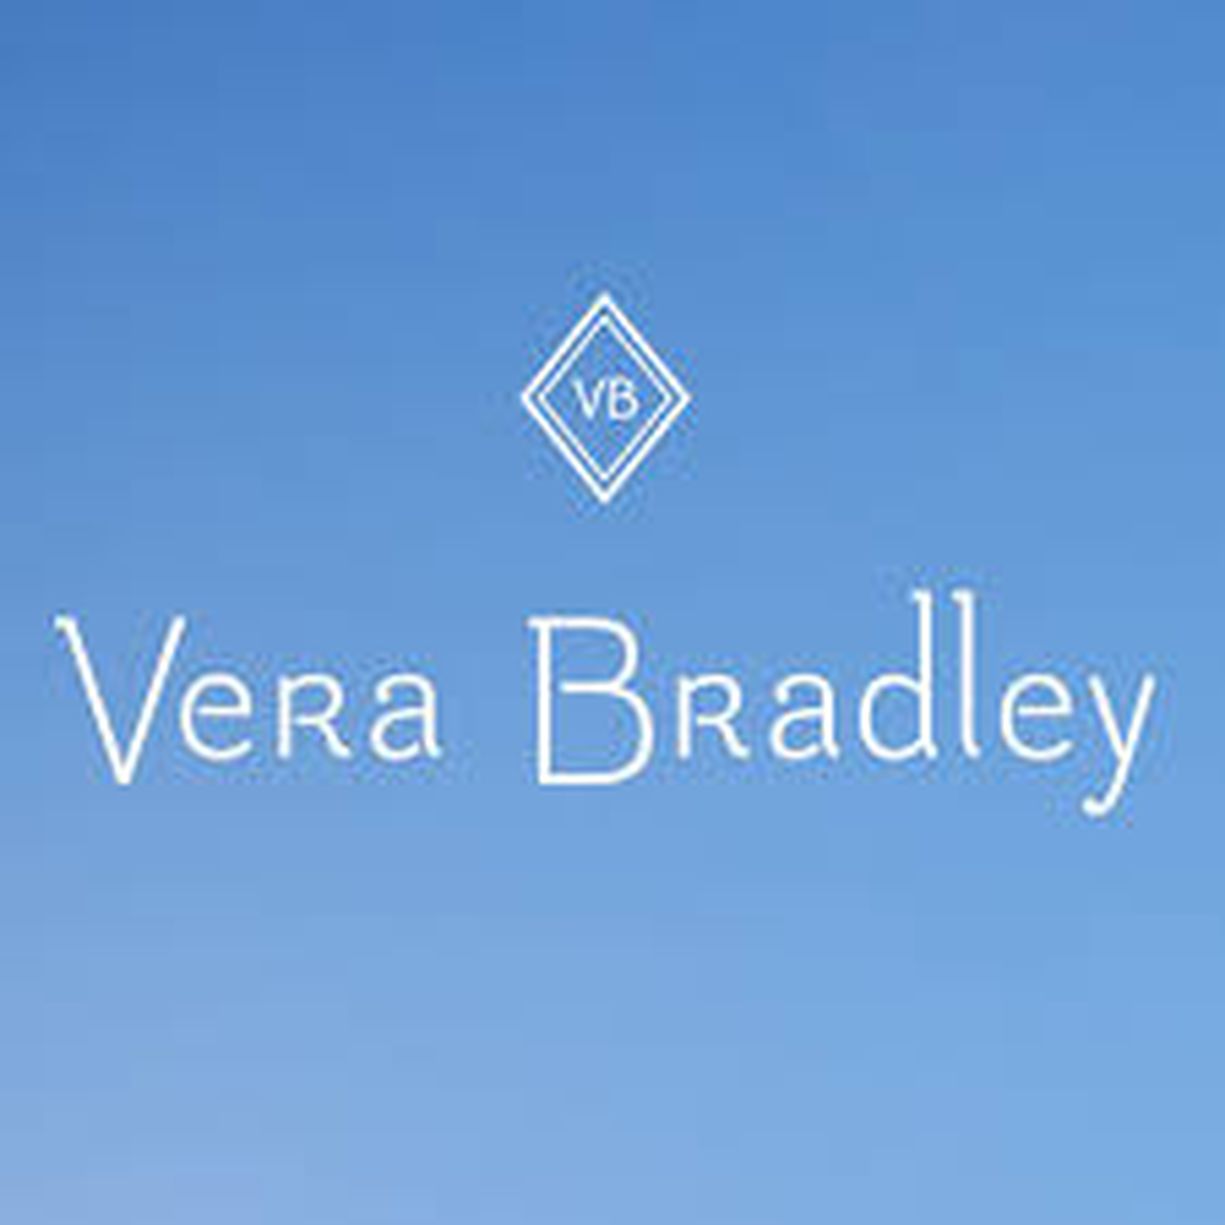 Vera Bradley introducerer Metaverse And Debut NFT Collection